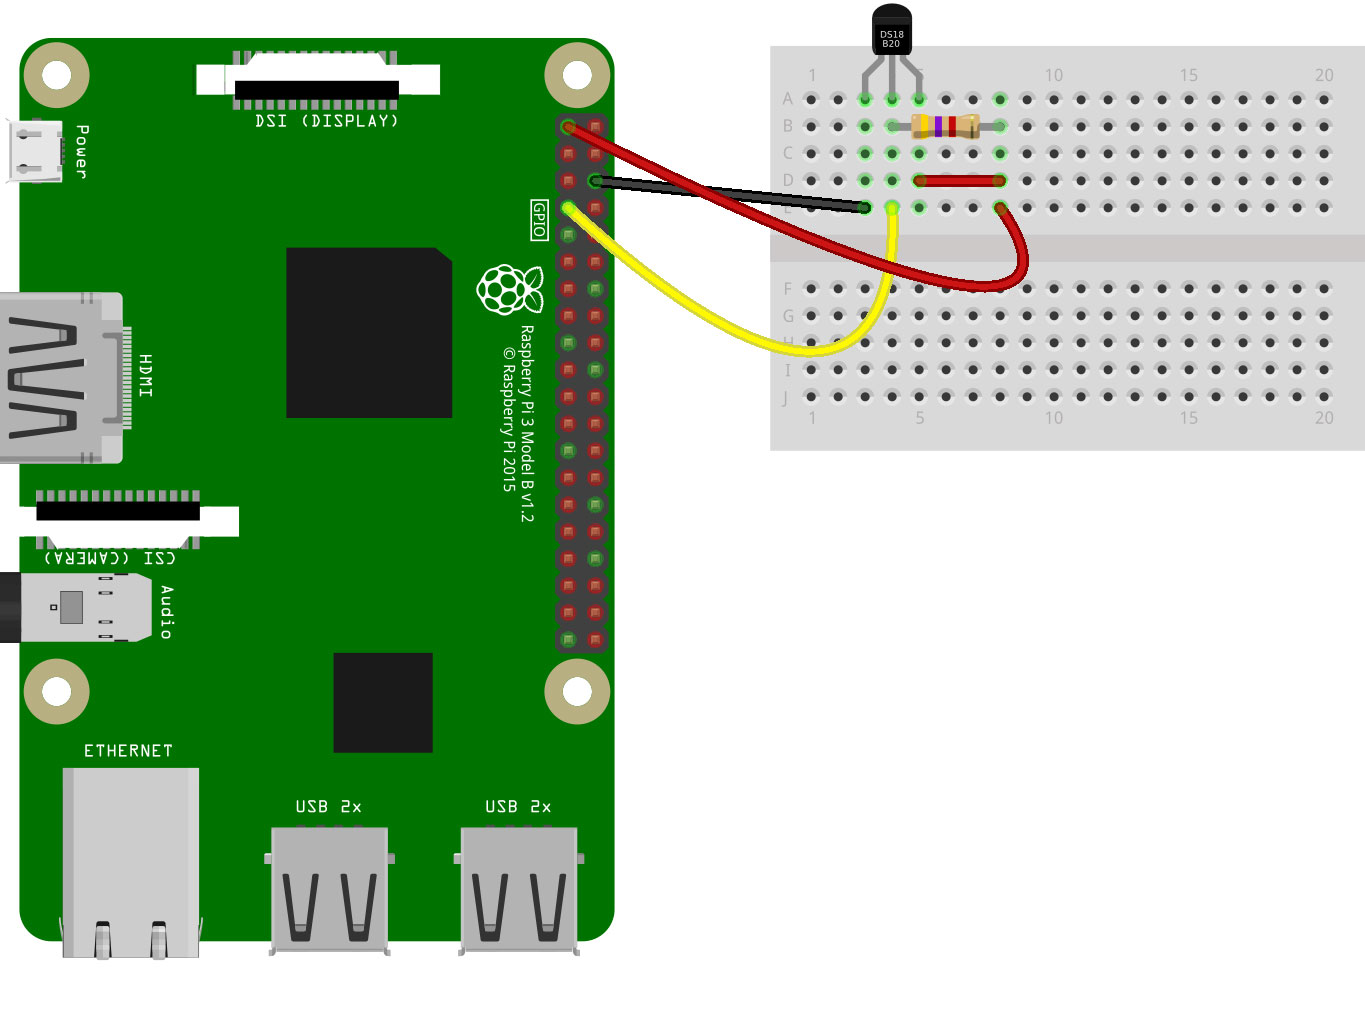 DS18B20 sensor connected on Raspberry Pi